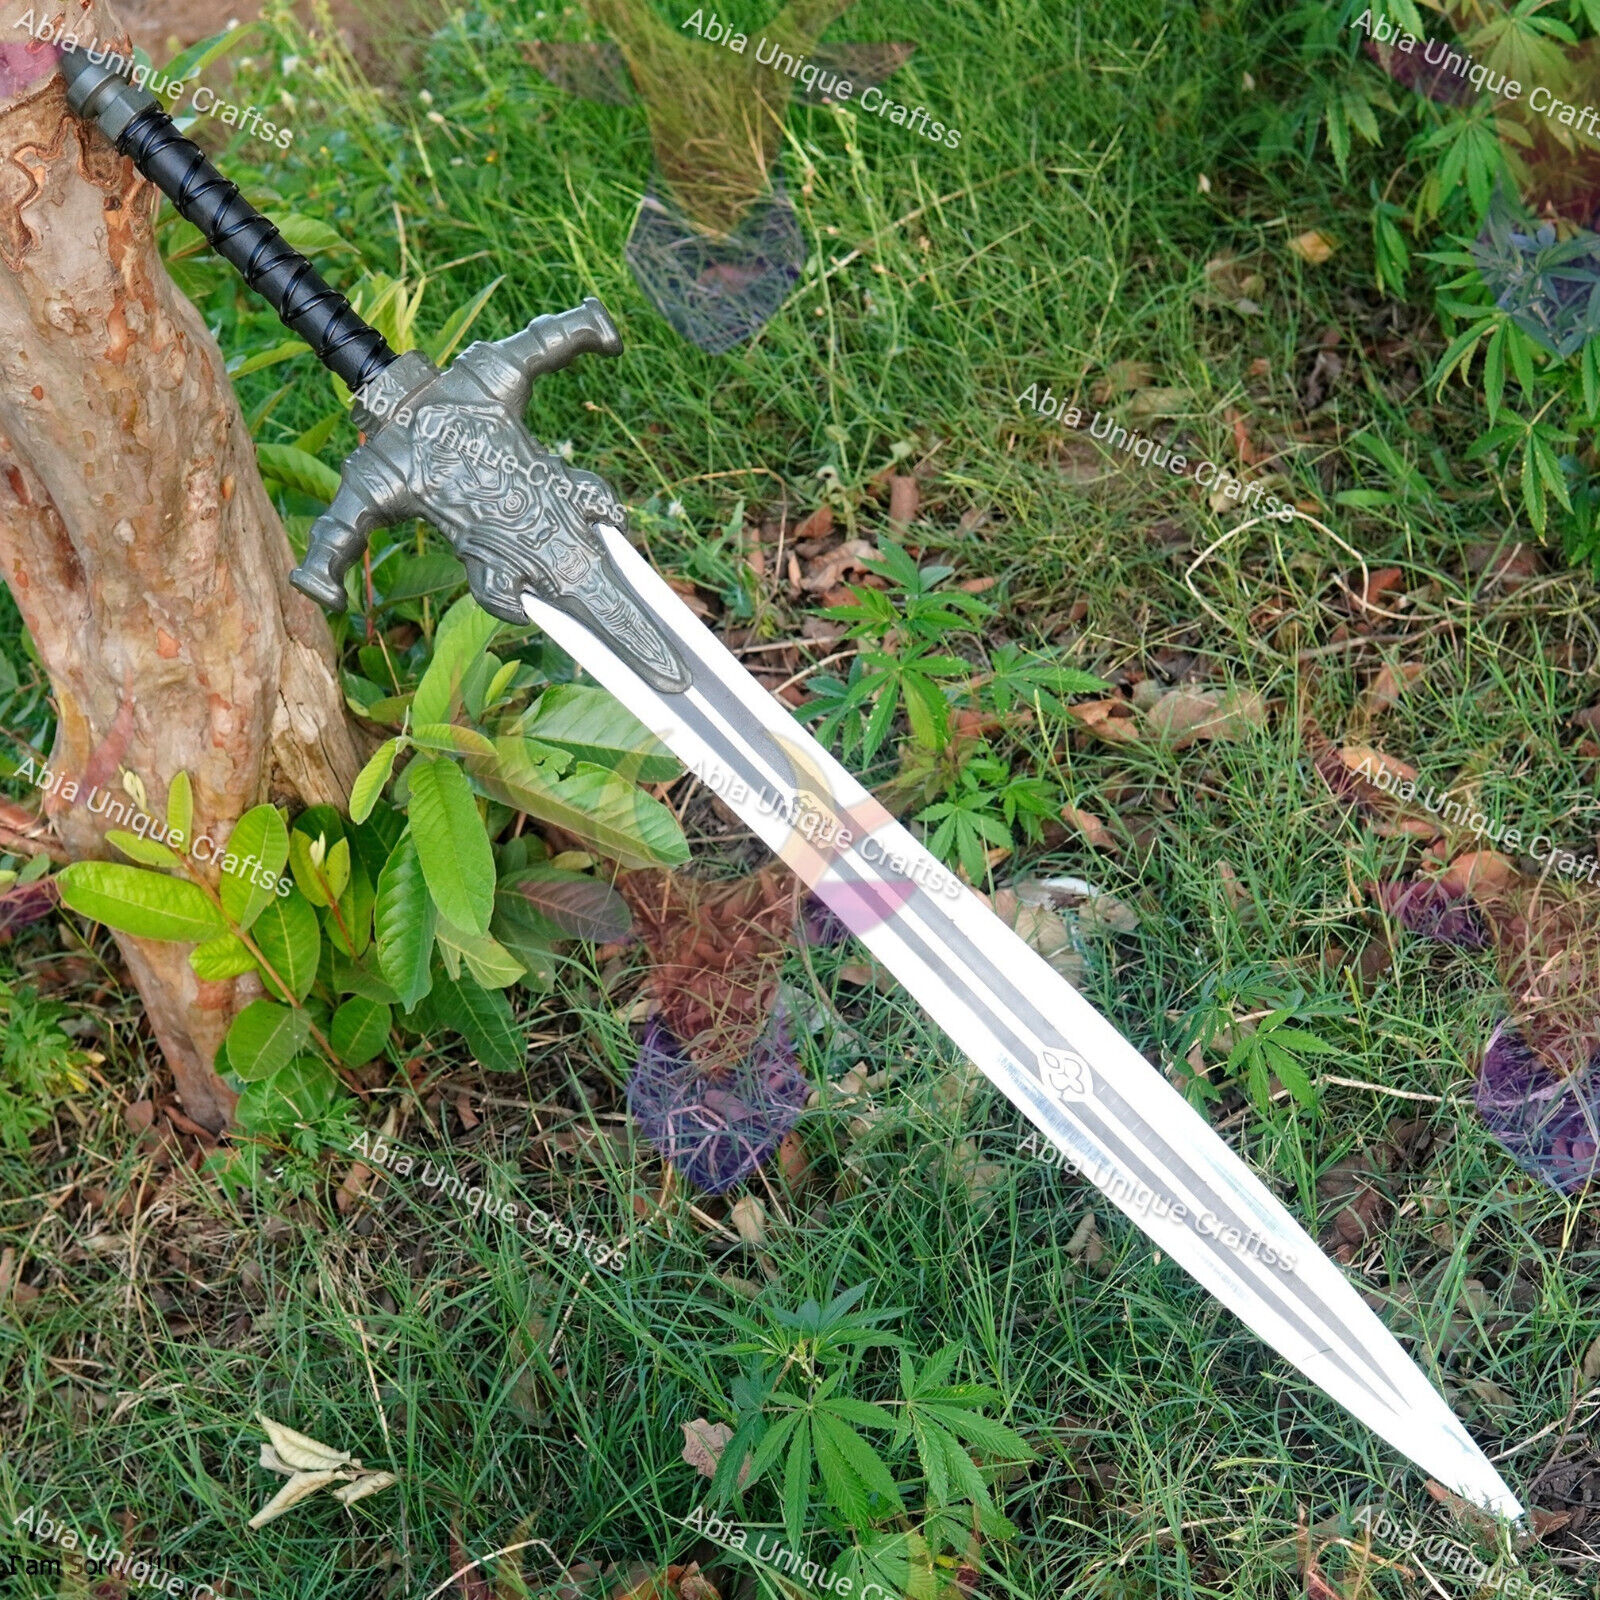 Dark Souls Artorias Sword Metal Wild Sword Hunt Full Metal Sword With Sheath